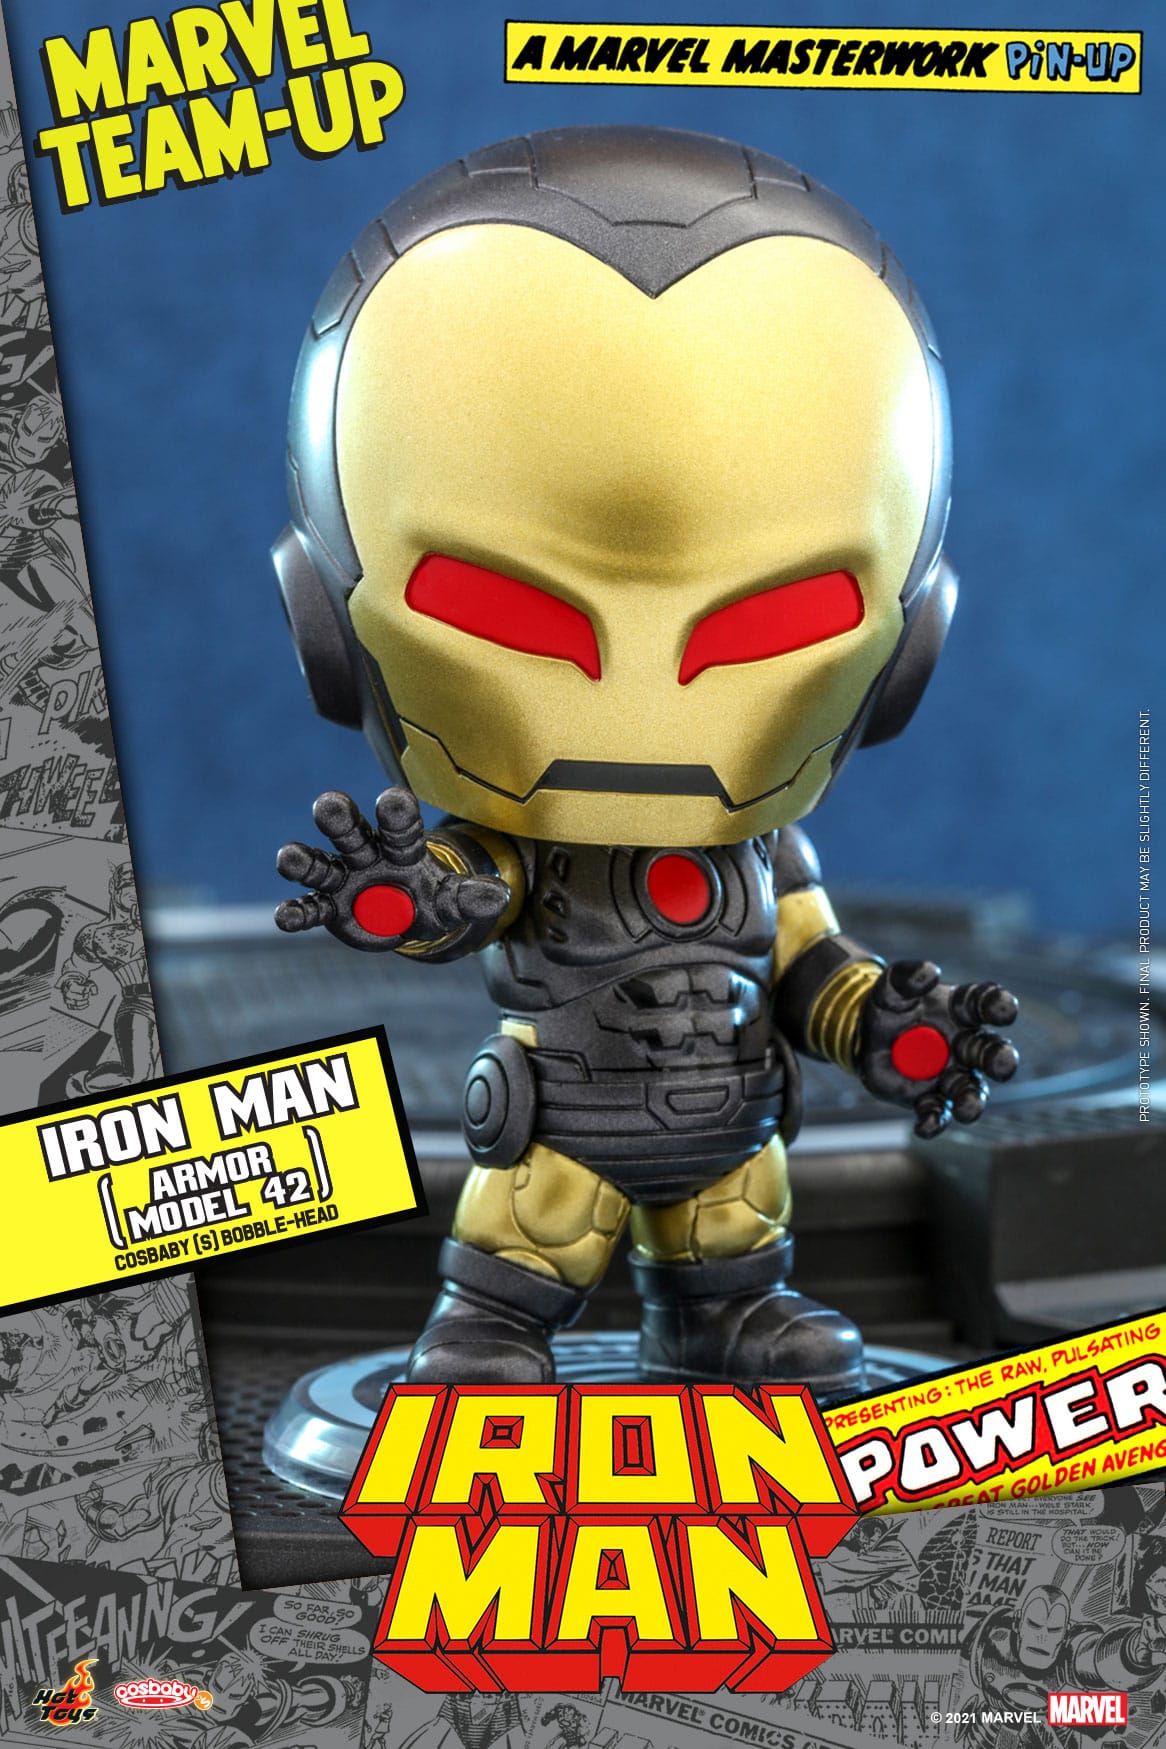 Iron Man (Model Armor 42) cosbaby